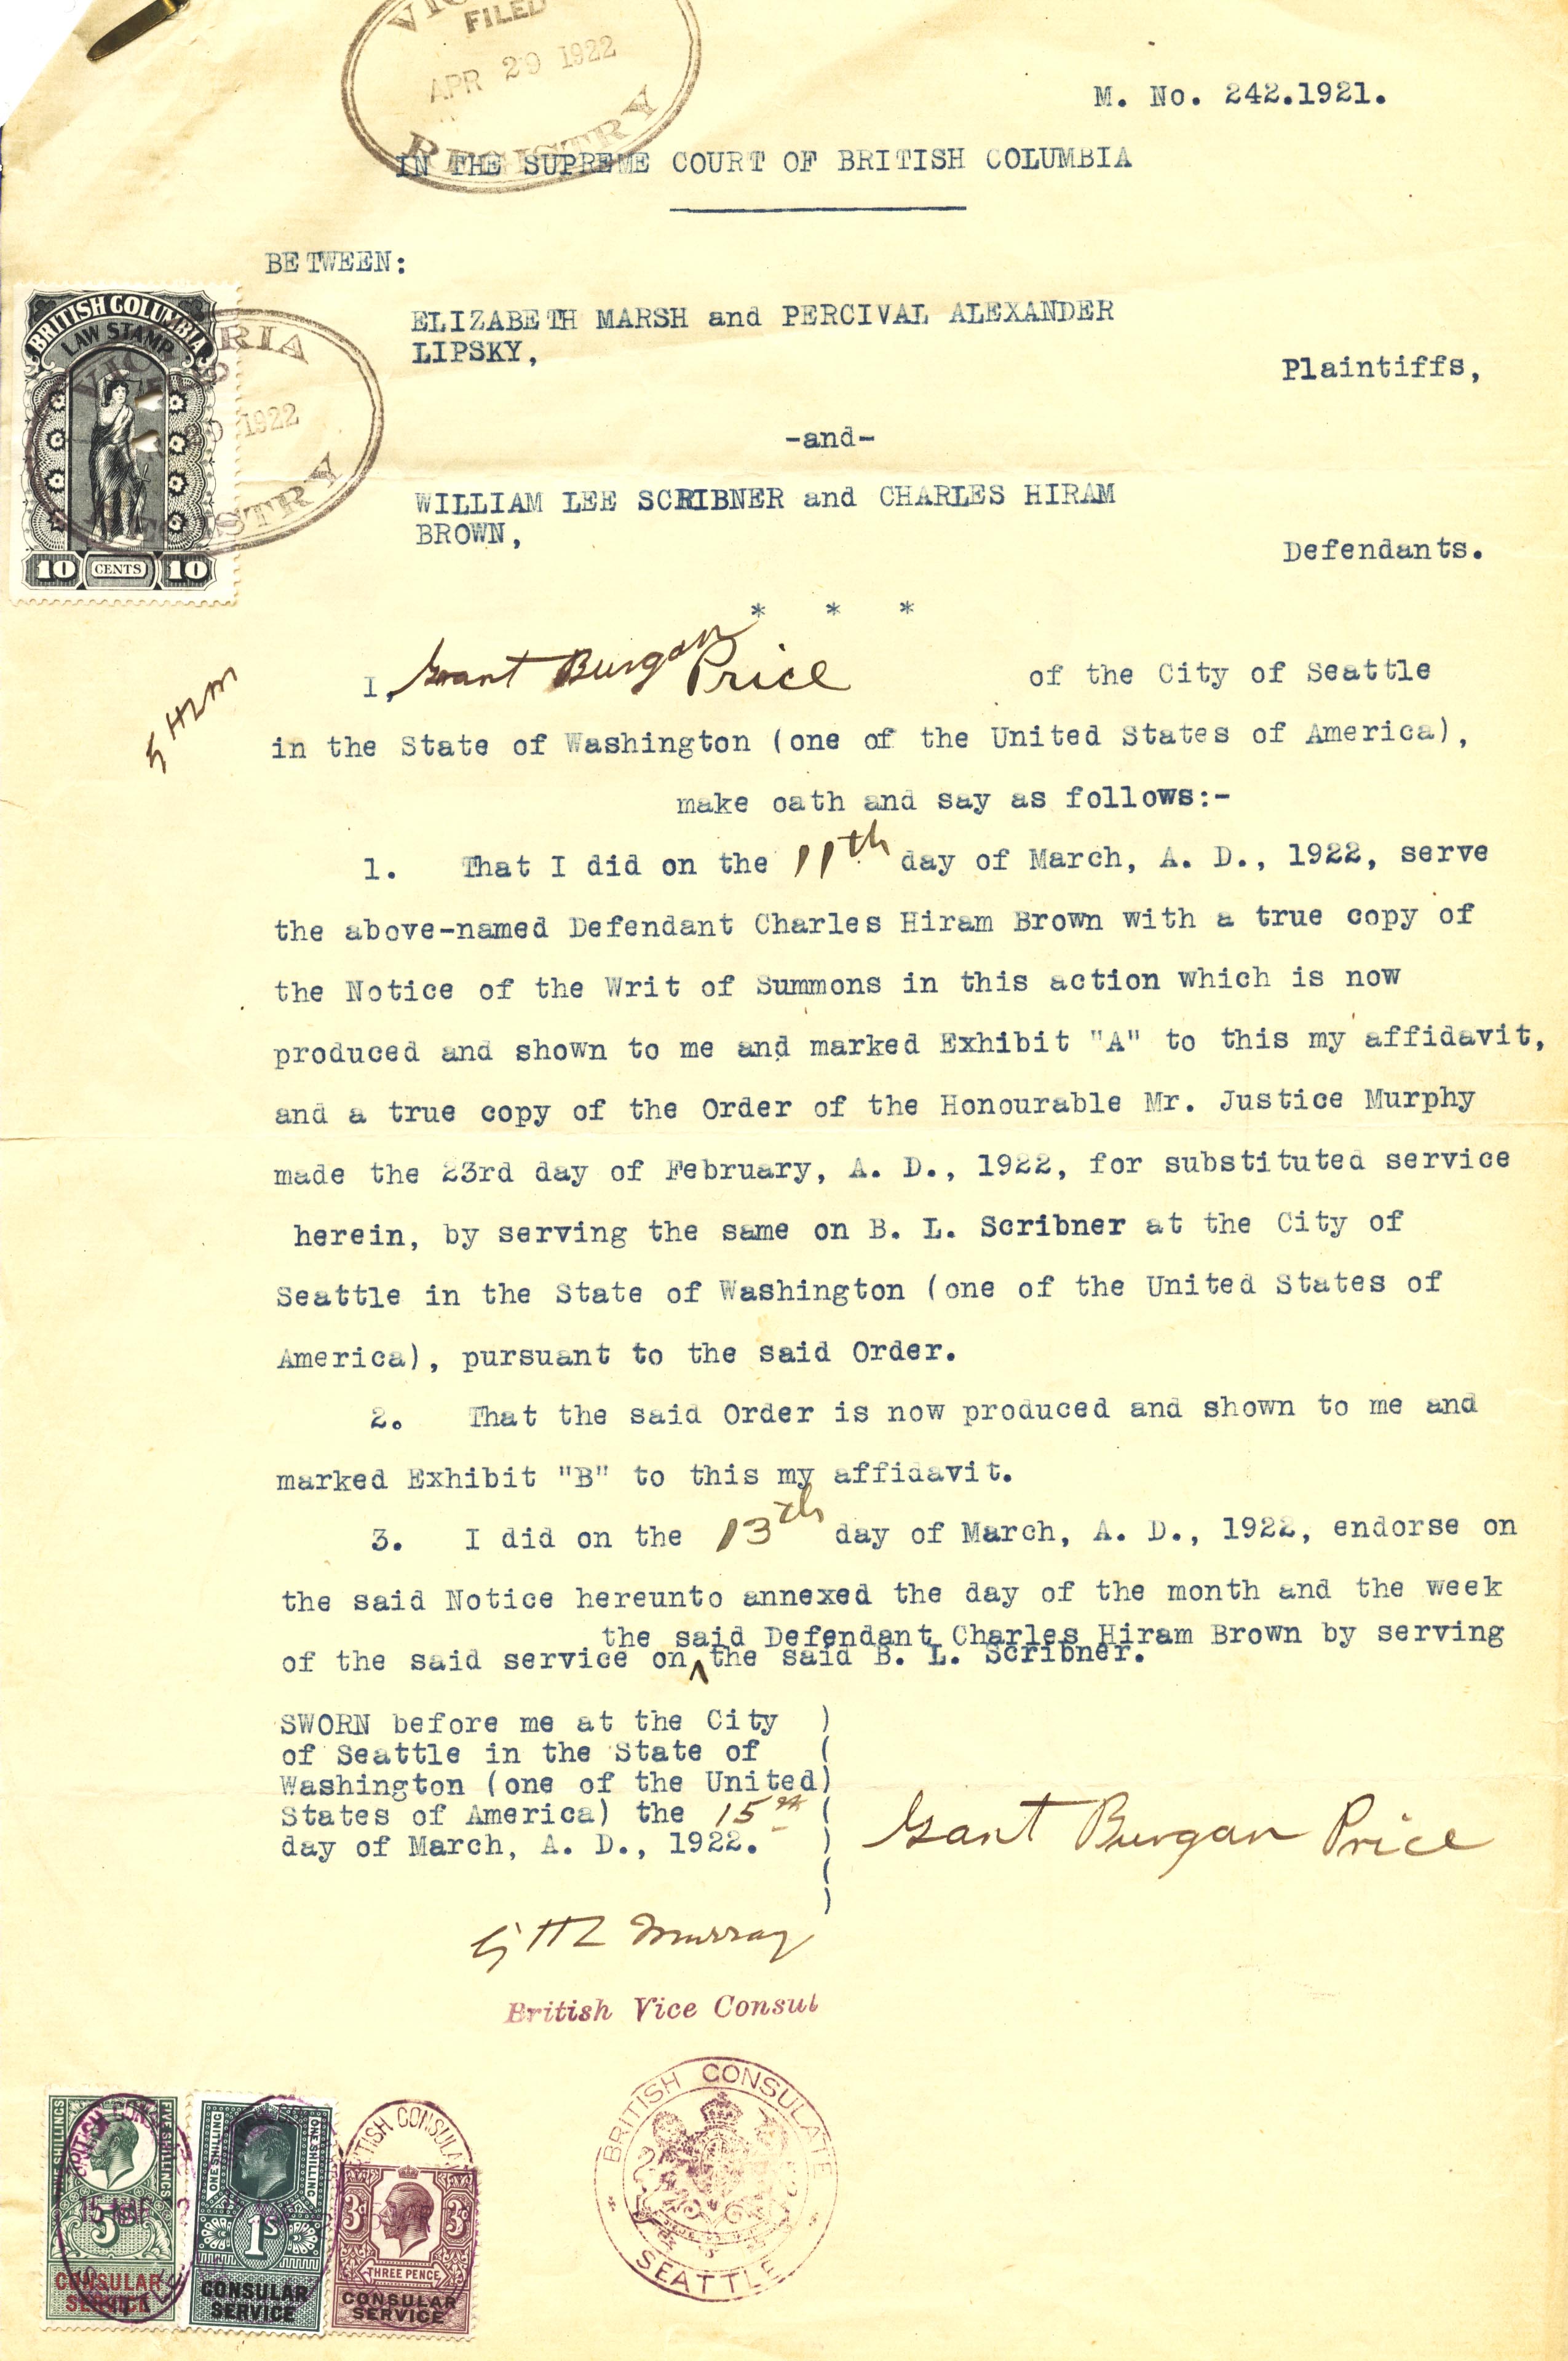 British Columbia Law stamp affixed to a 1922 affidavit